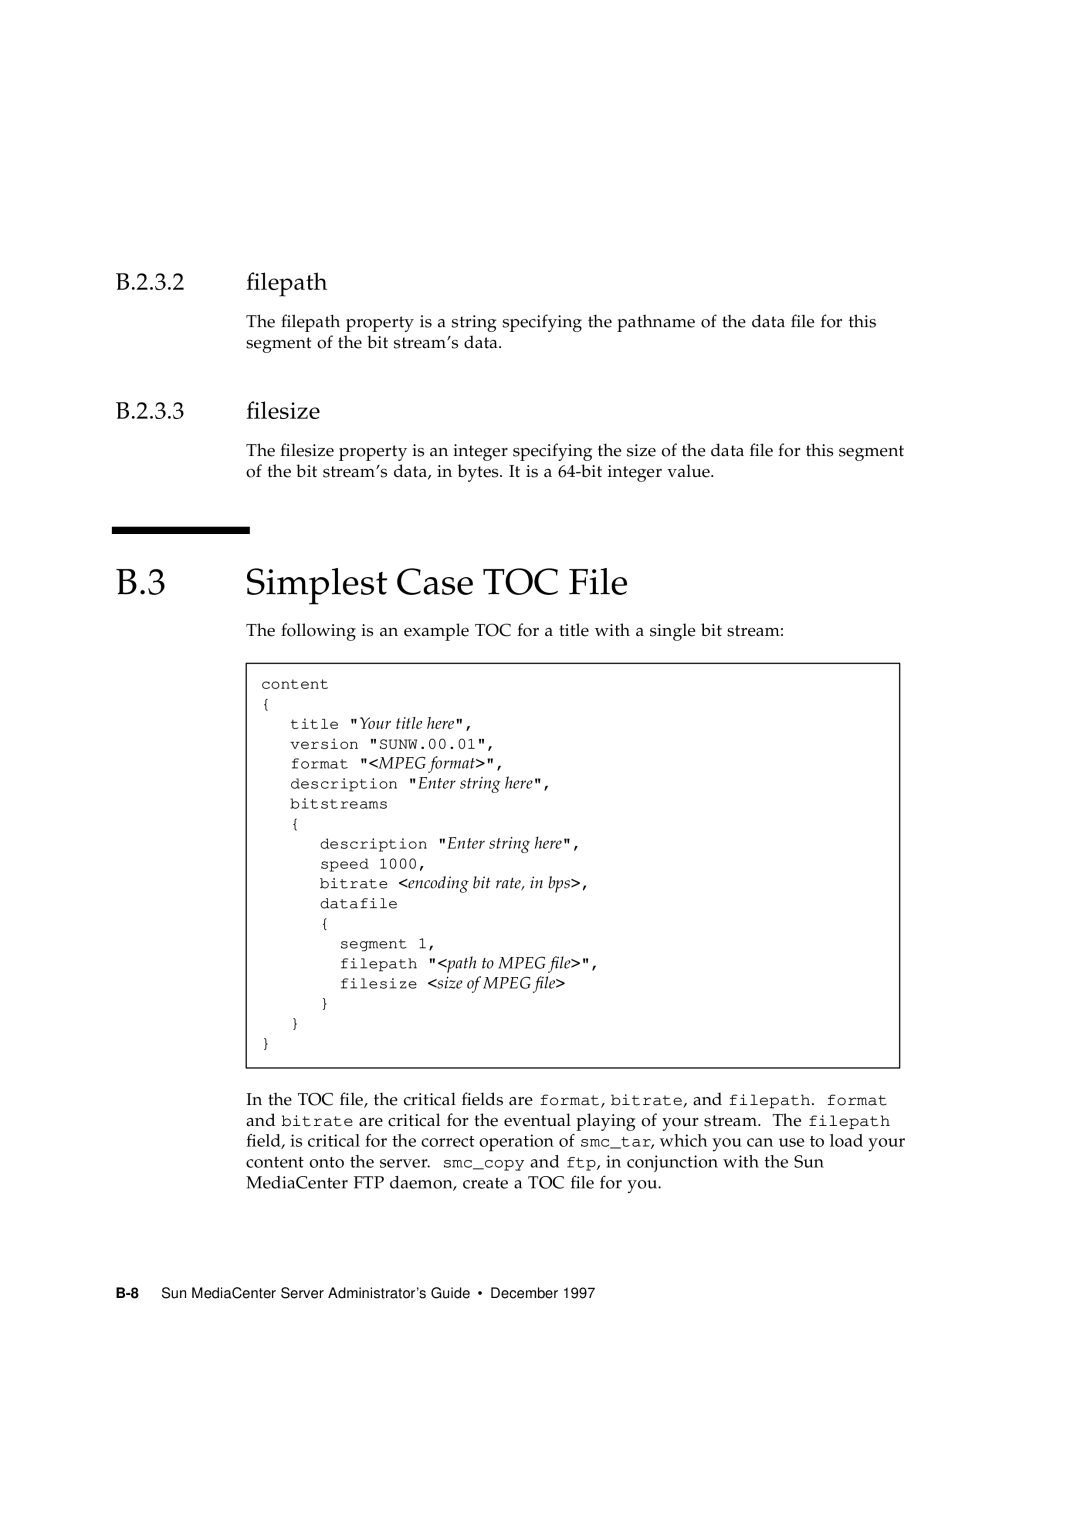 Sun Microsystems 2.1 manual B.3 Simplest Case TOC File, B.2.3.2 ﬁlepath, B.2.3.3 ﬁlesize 